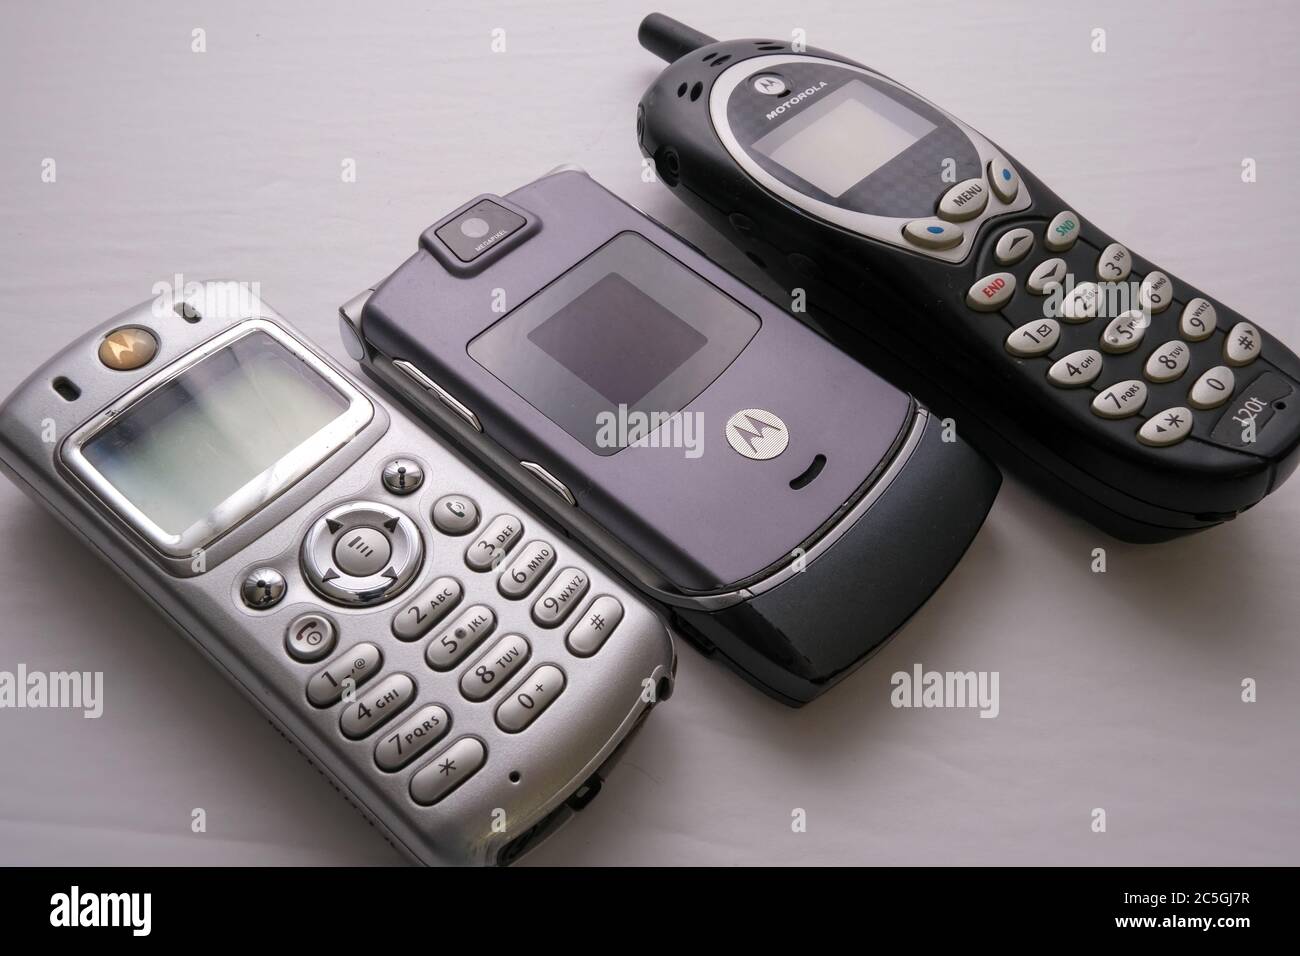 Motorola flip phone -Fotos und -Bildmaterial in hoher Auflösung – Alamy